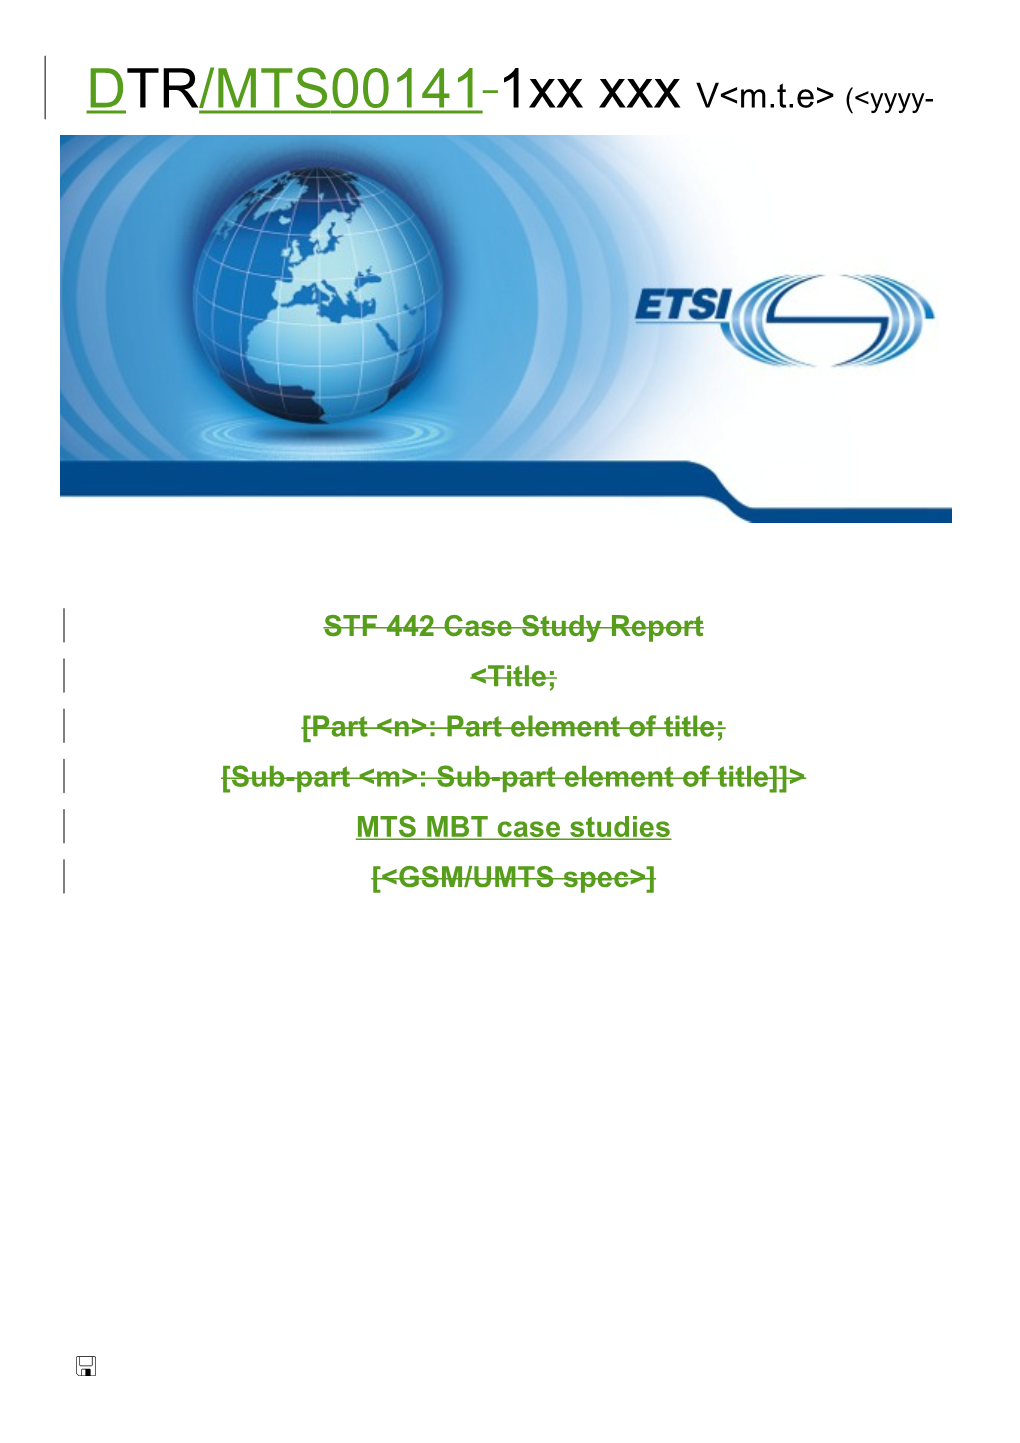 STF 442 Case Study Report